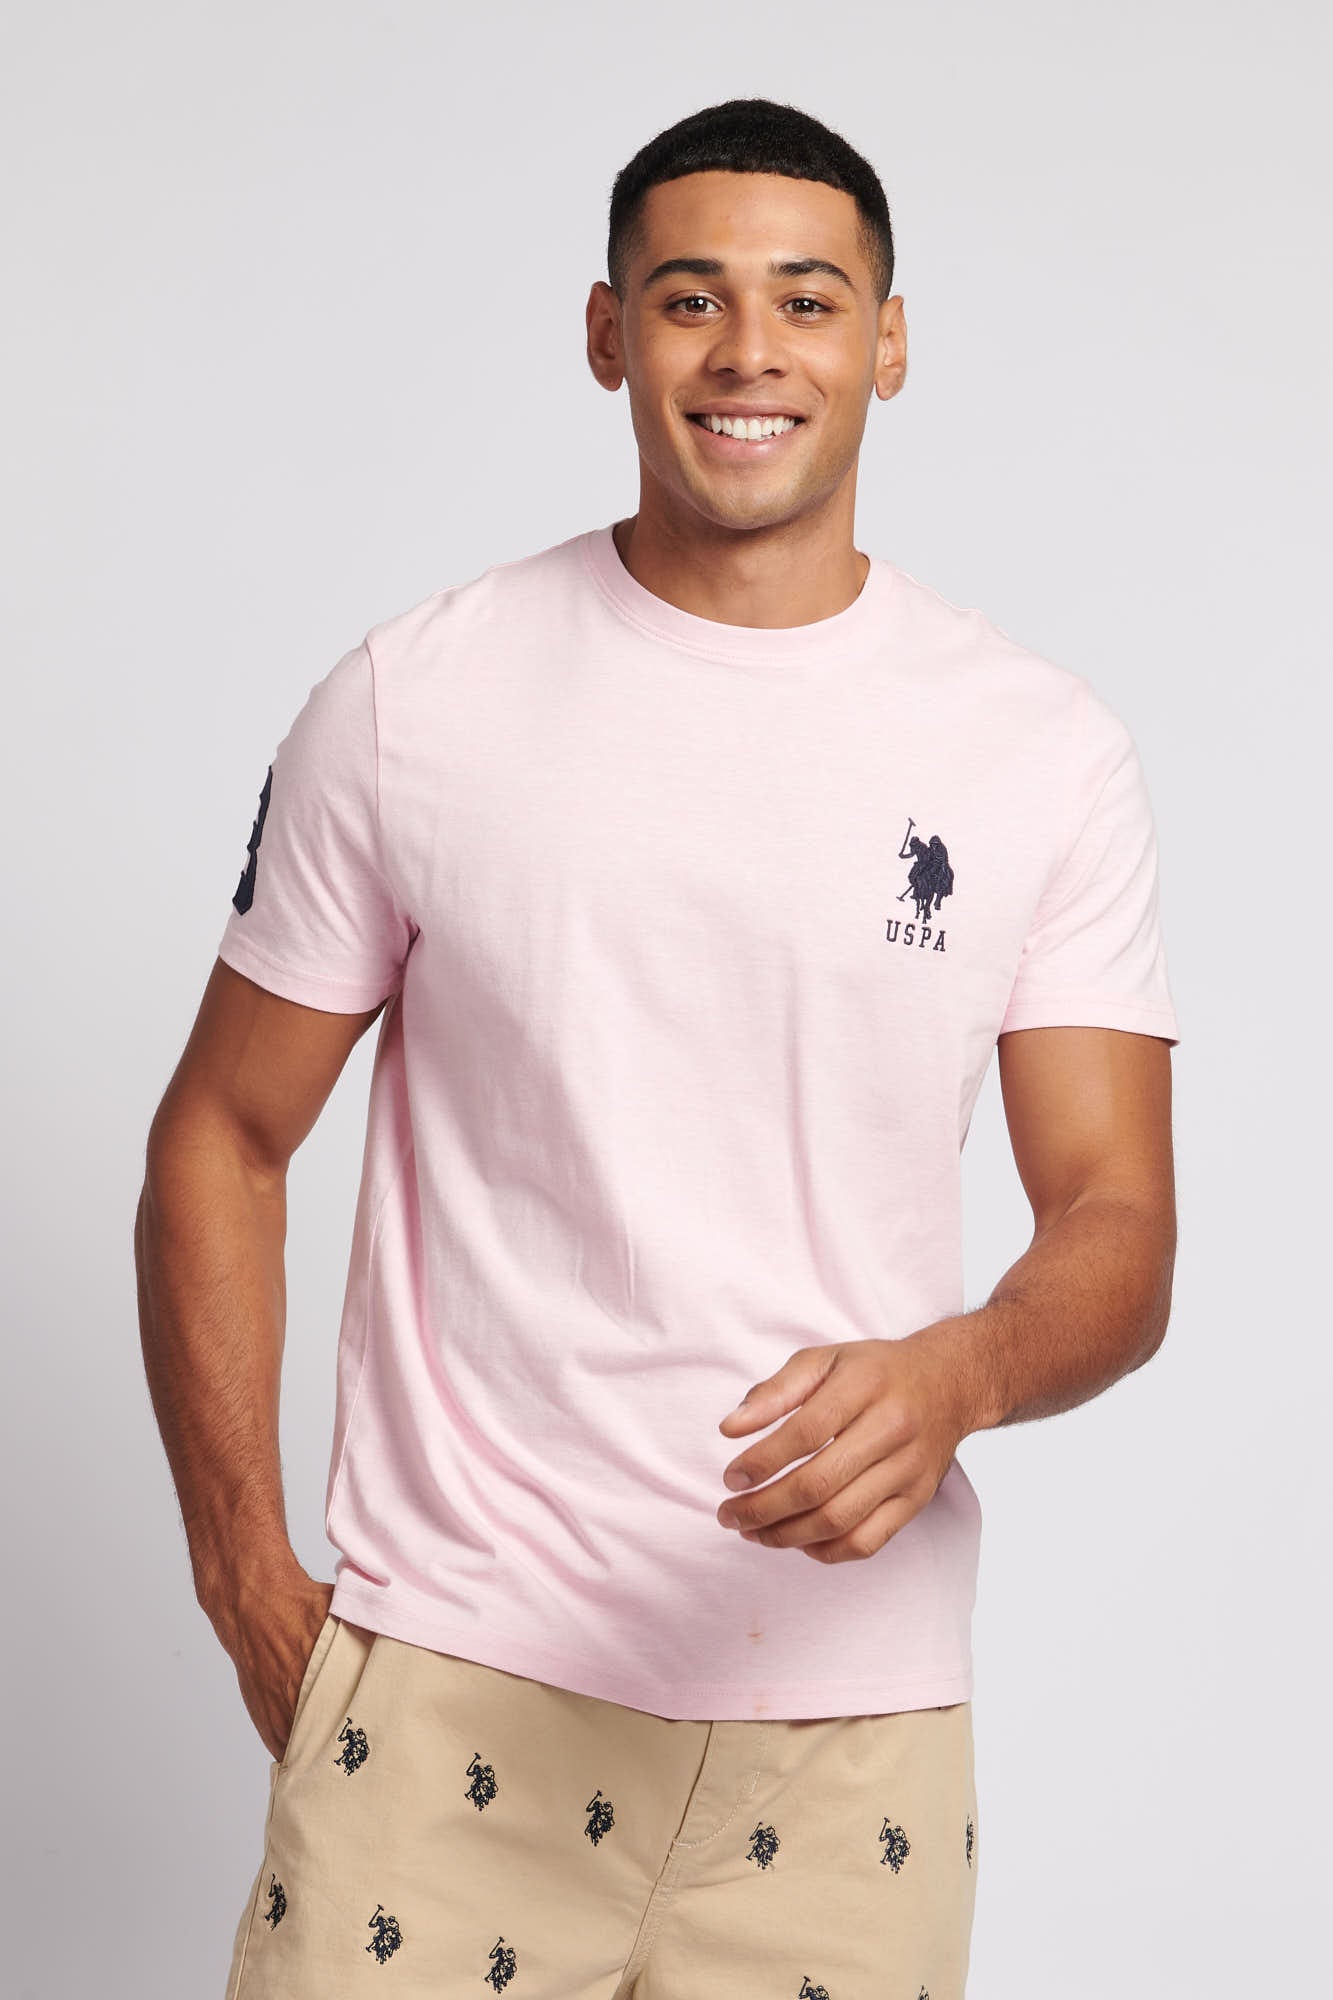 U.S. Polo Assn. Mens Player 3 T-shirt in Orchid Pink Marl – U.S. Polo Assn.  UK